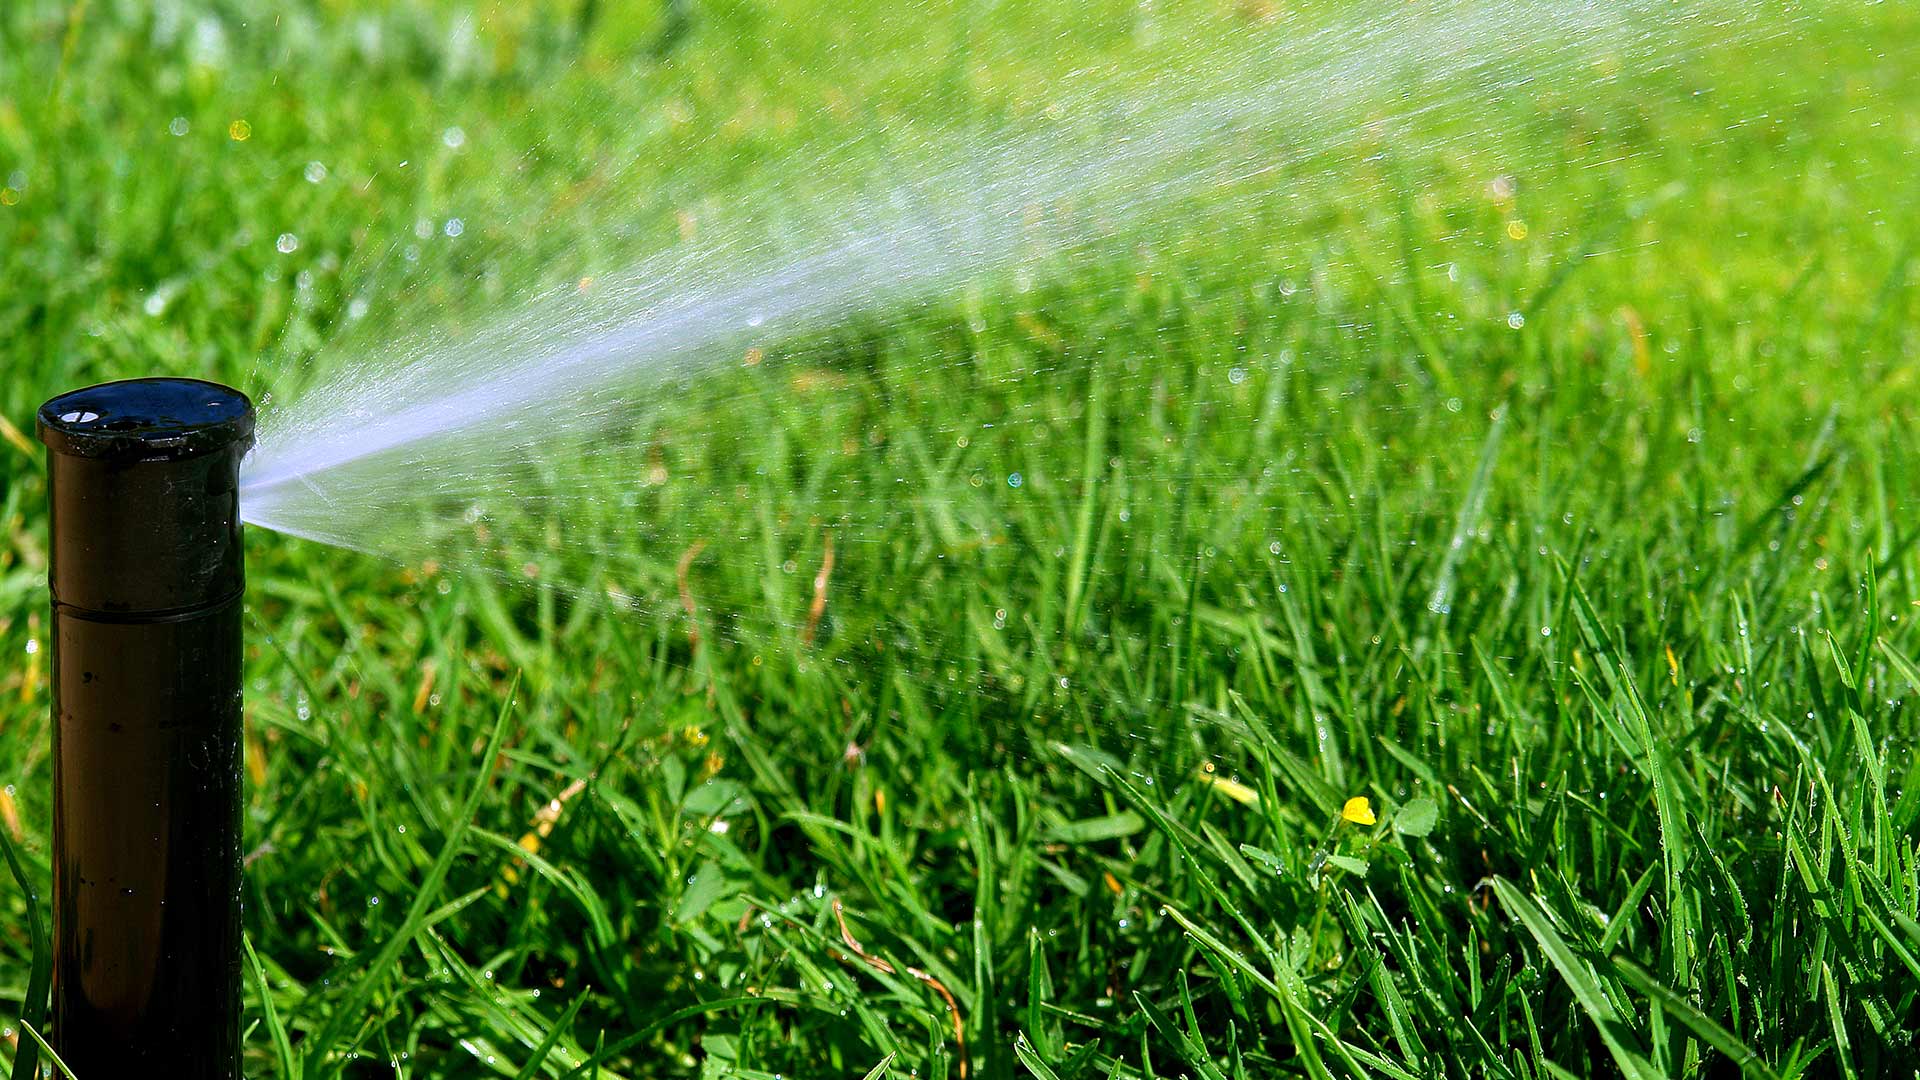 Irrigation sprinkler in lawn in Garland, TX.